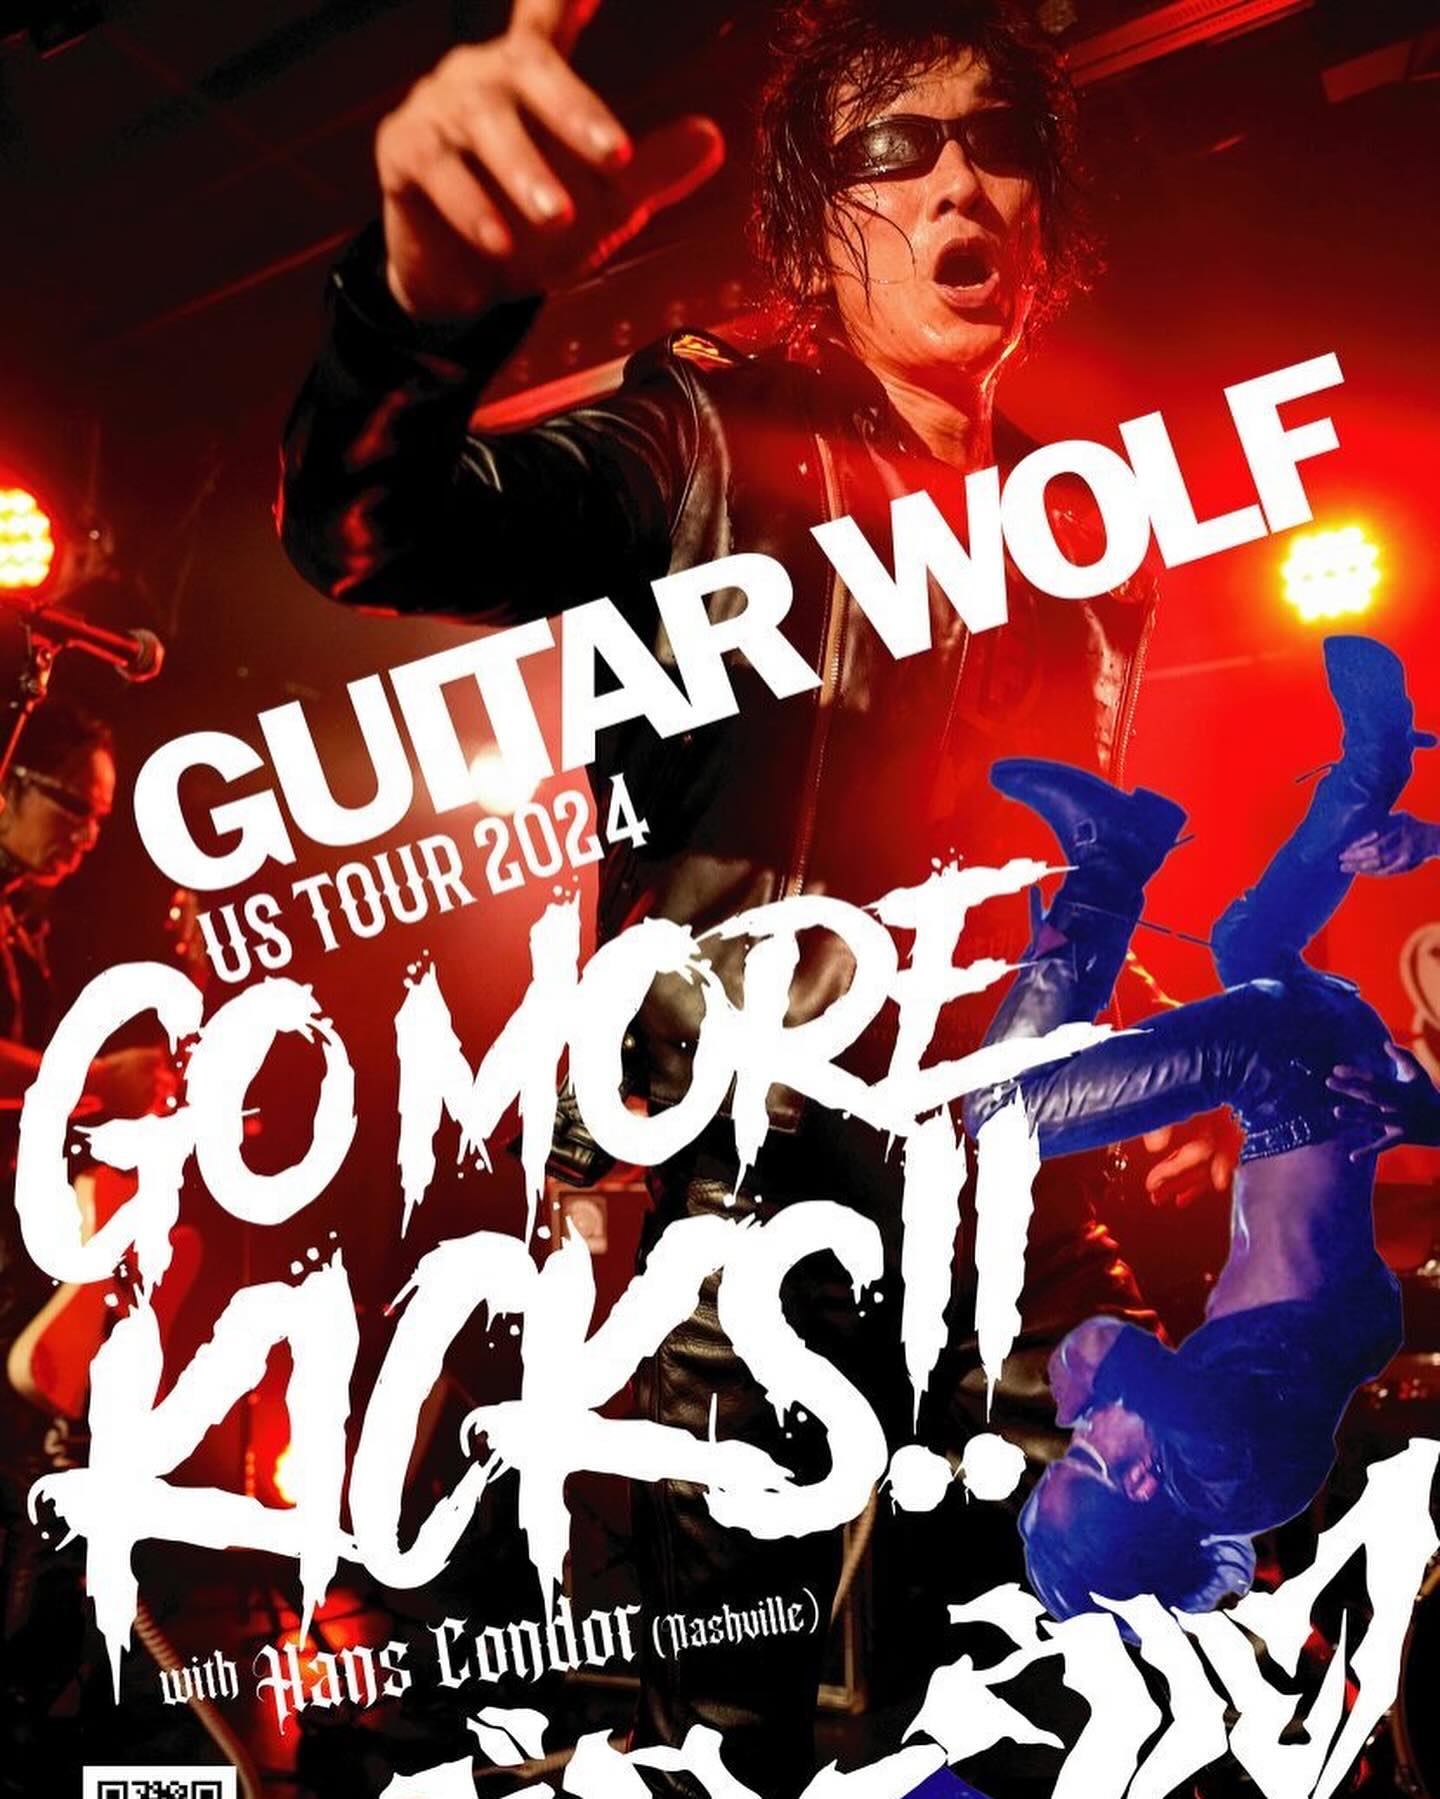 Guitar Wolf US Tour